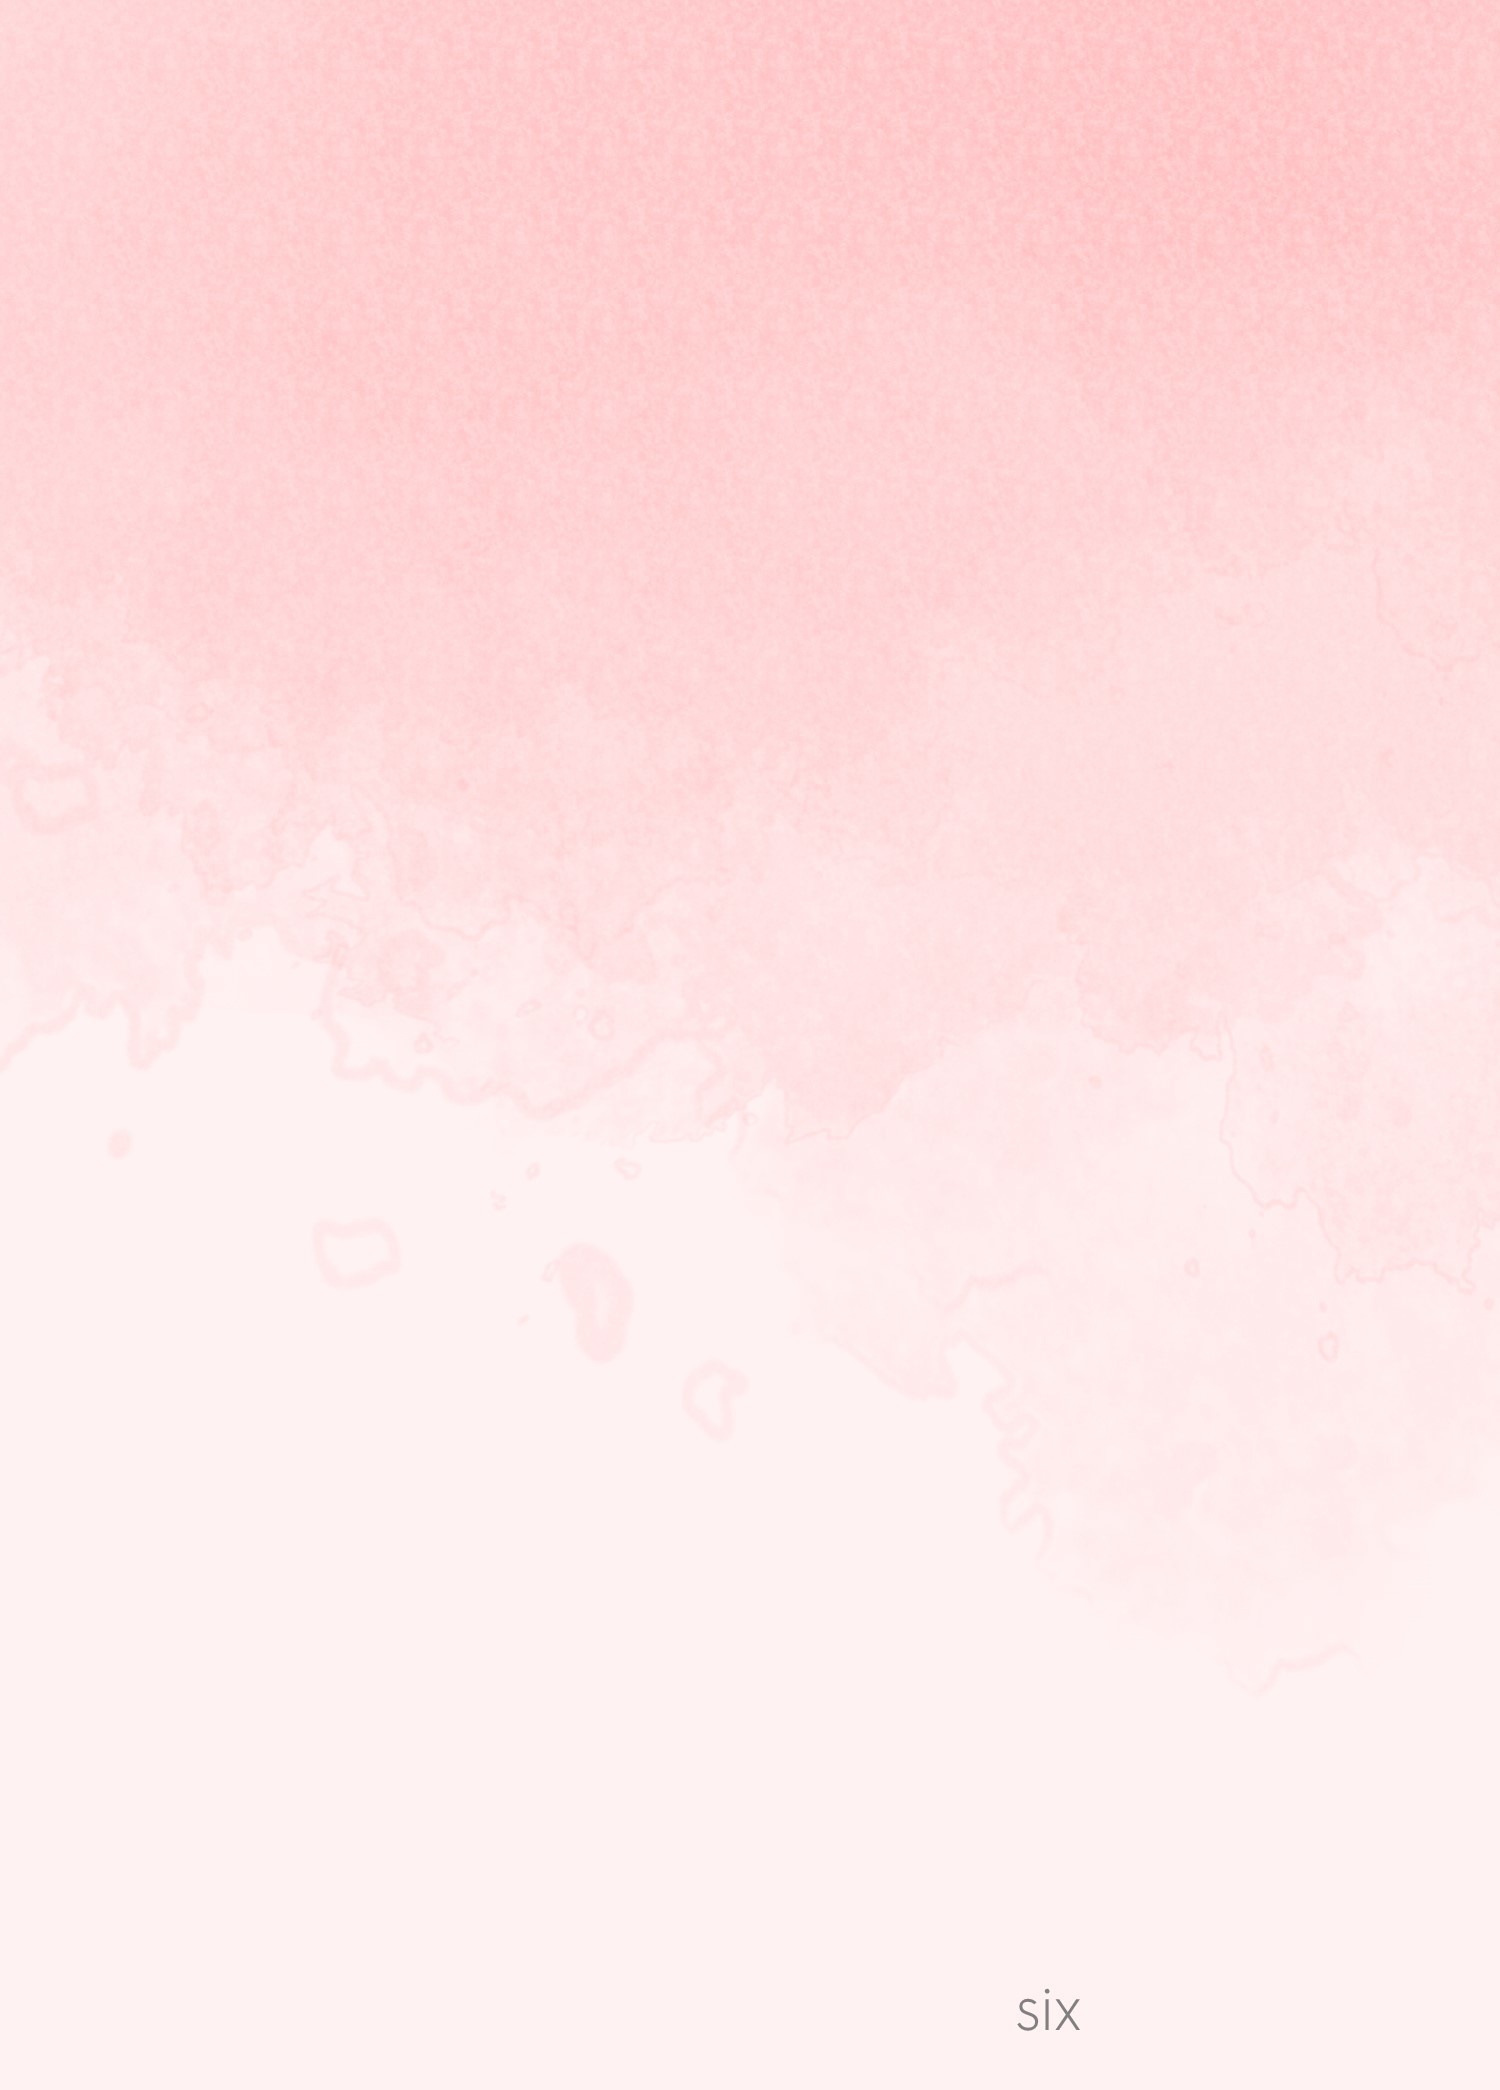 light pink girly background